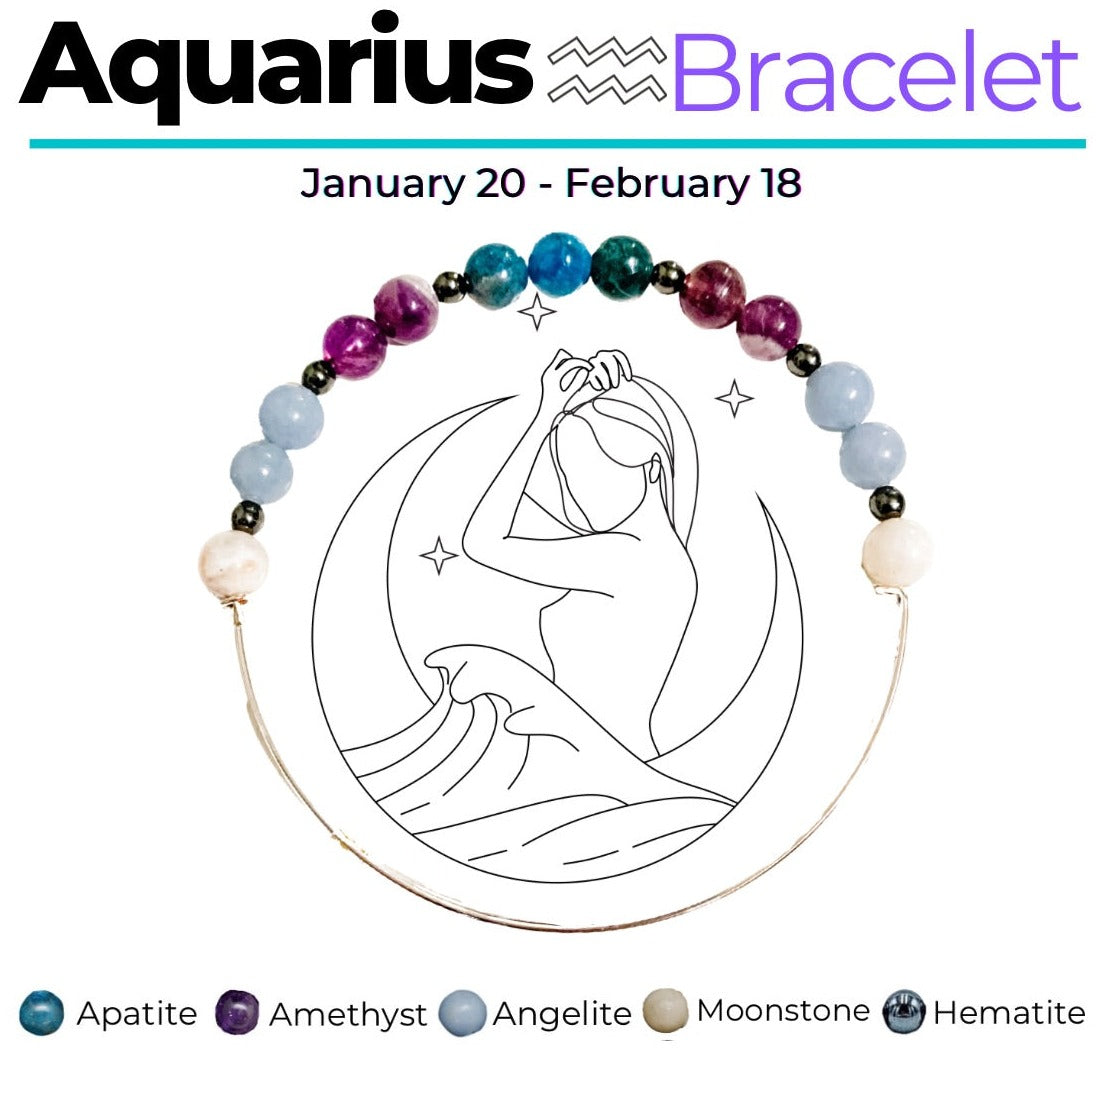 Aquarius Bracelet with Amethyst and Hematite beads.